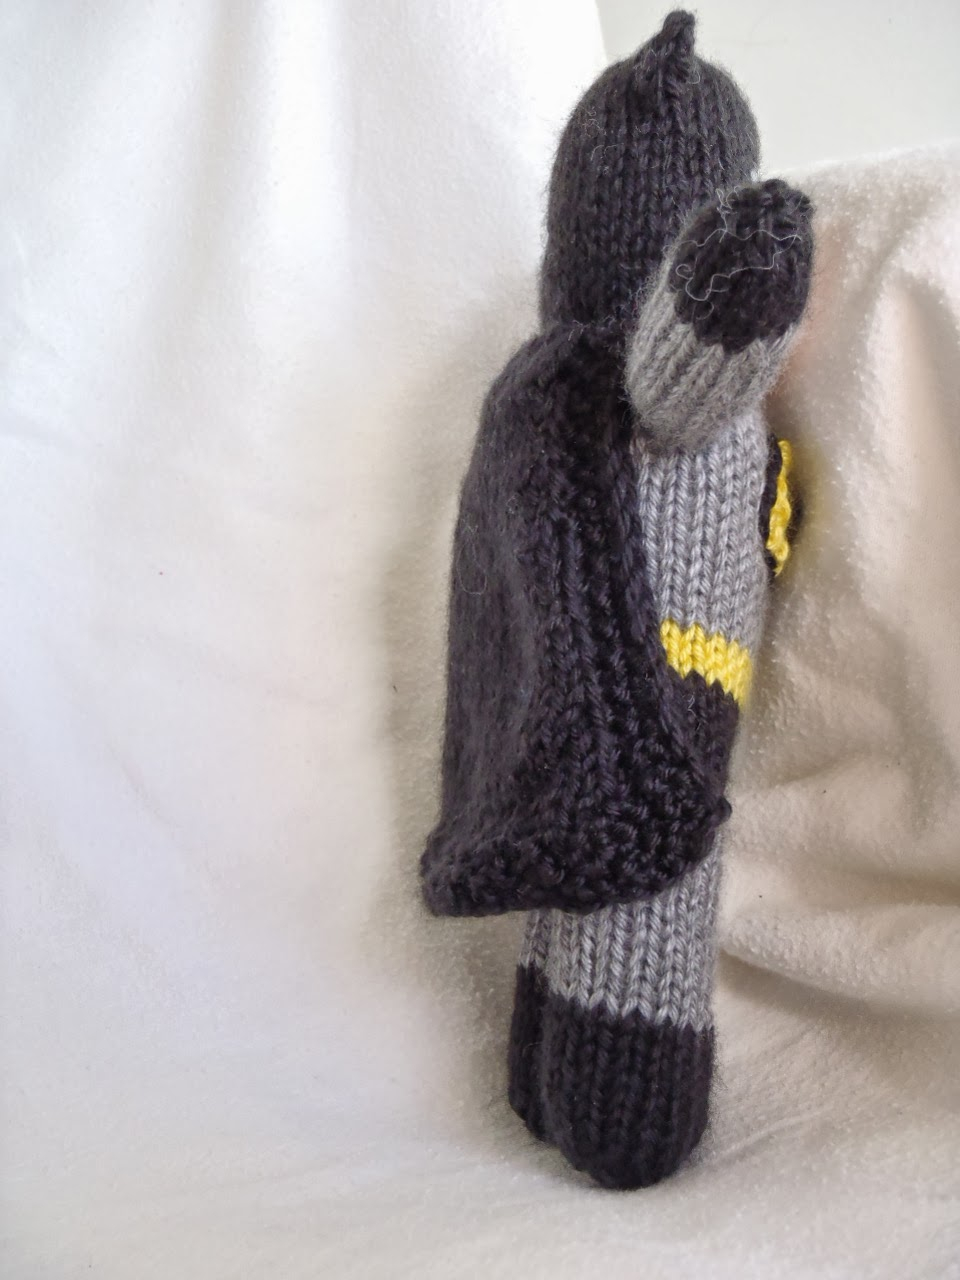 Batman Doll Knitting Pattern Stanas Critters Etc Knitting Pattern For Batman Toy